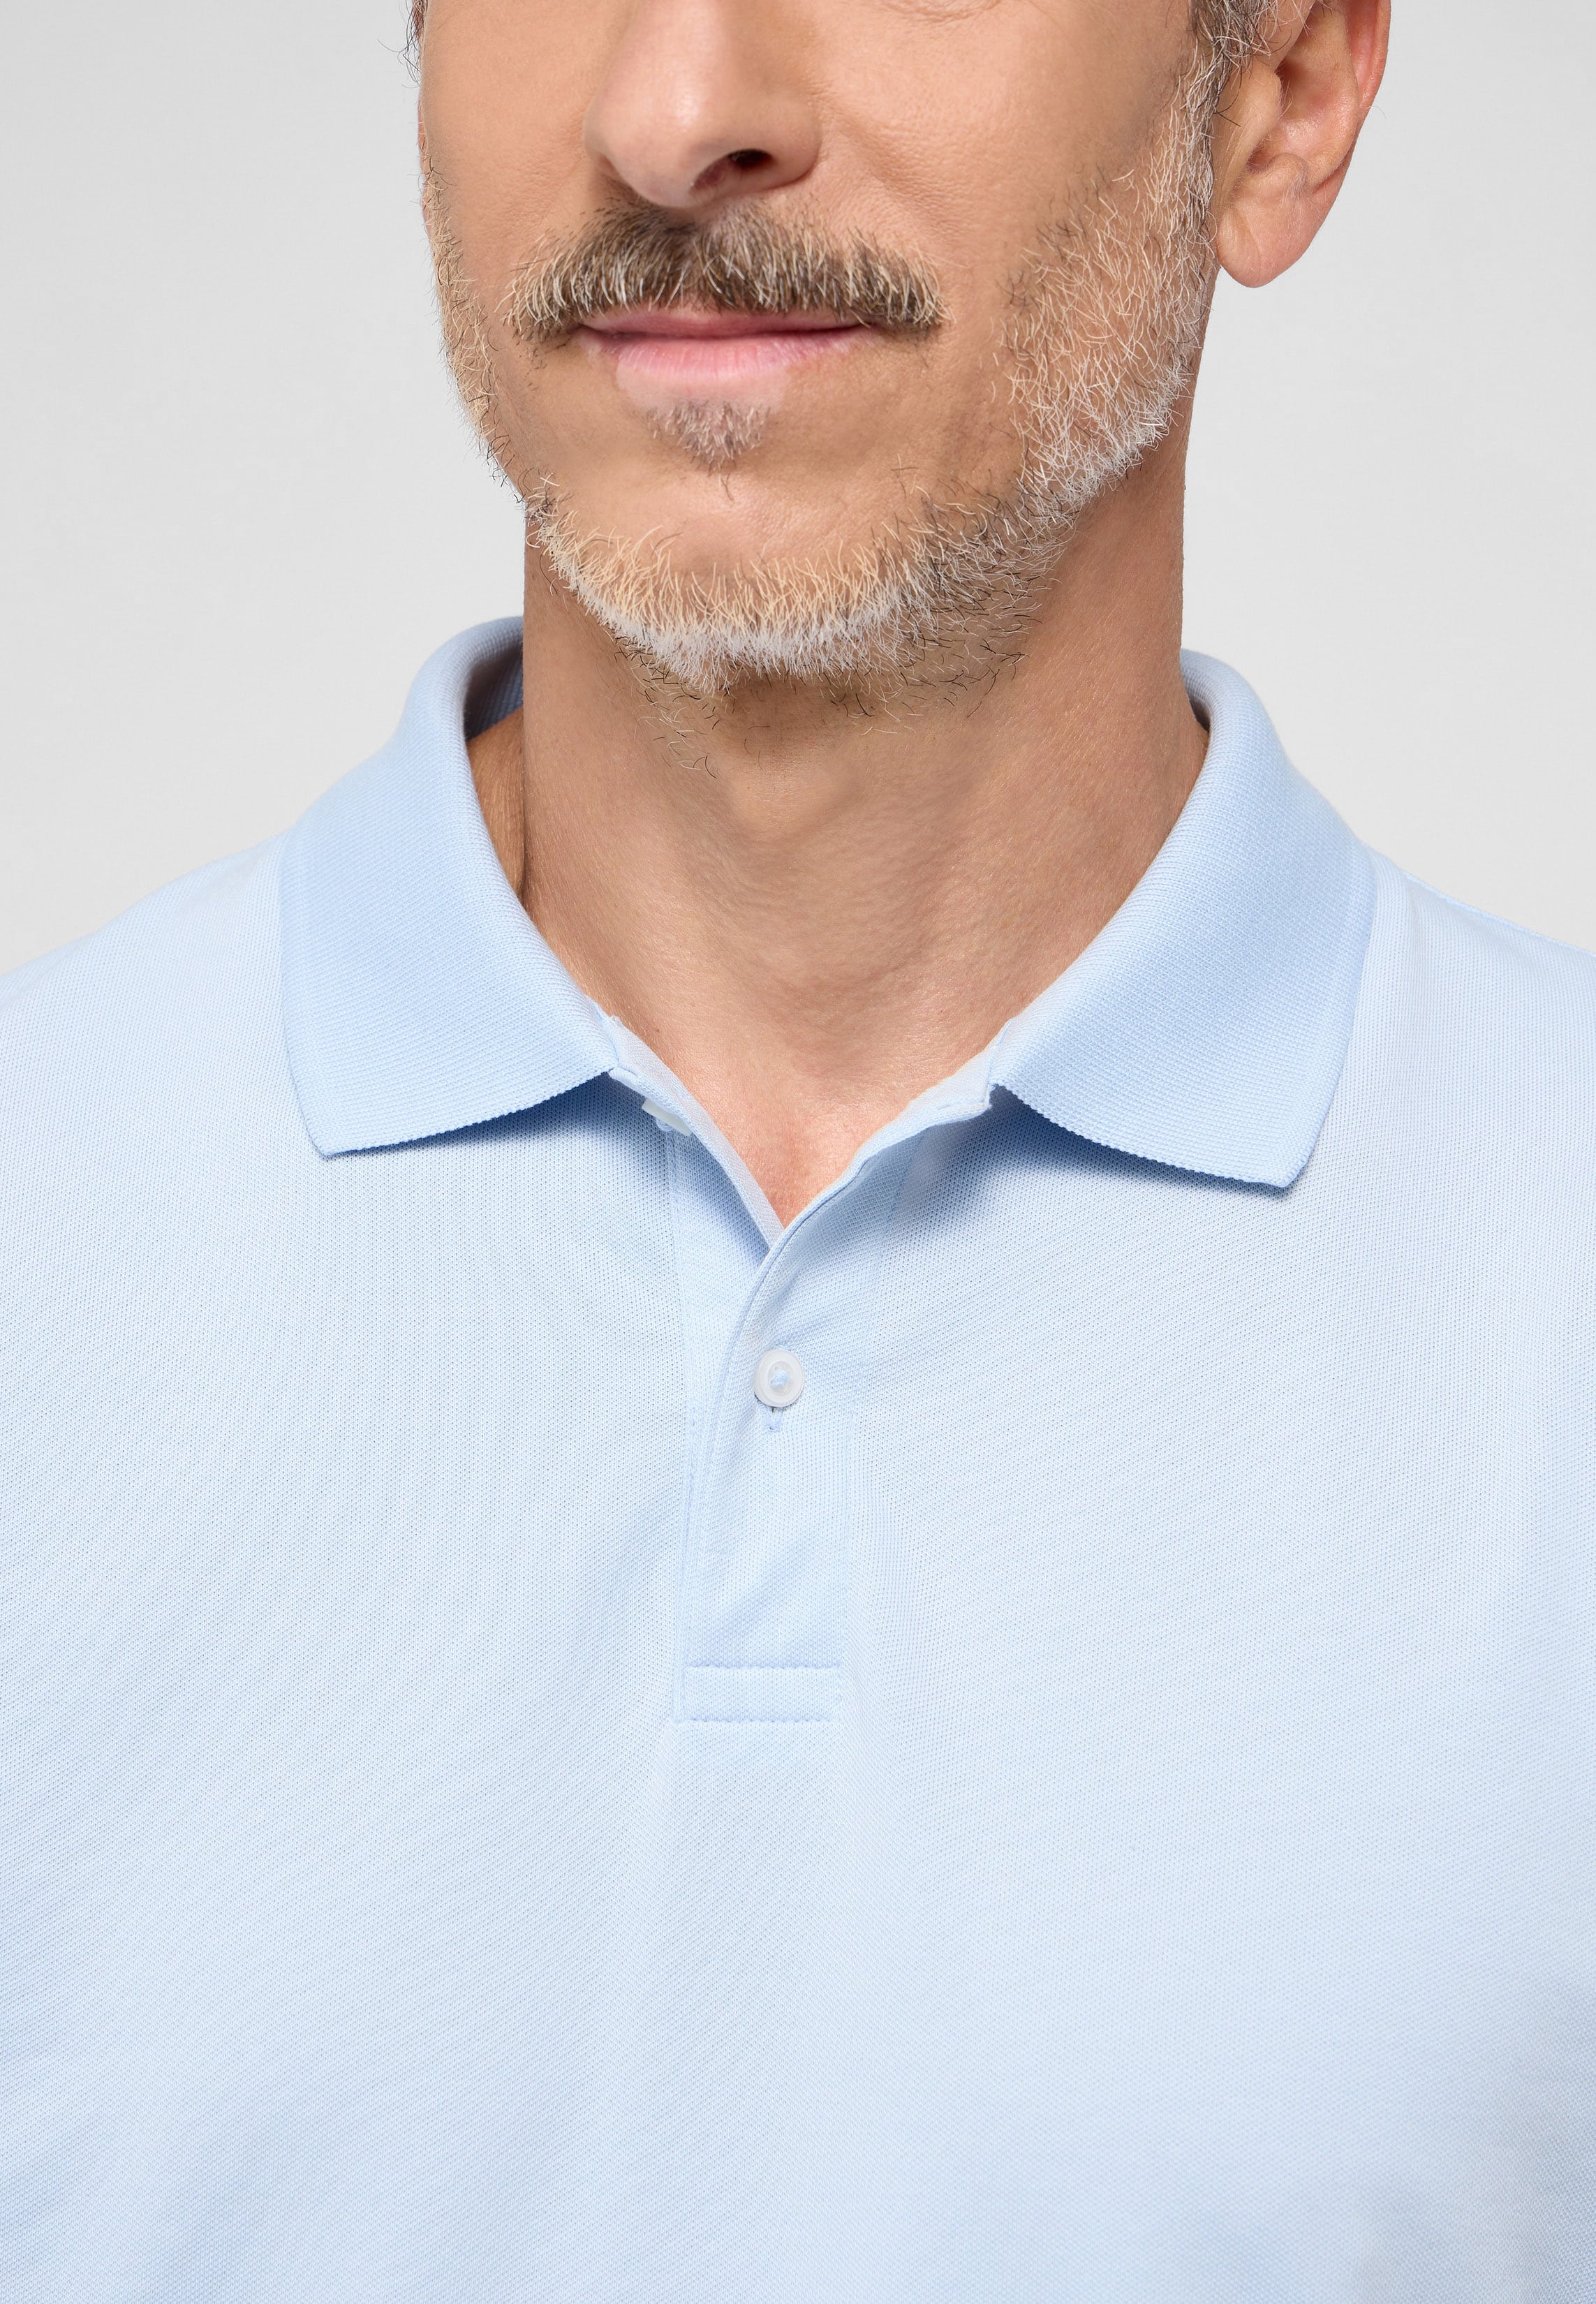 SLIM FIT Performance Shirt in lyseblå vlakte